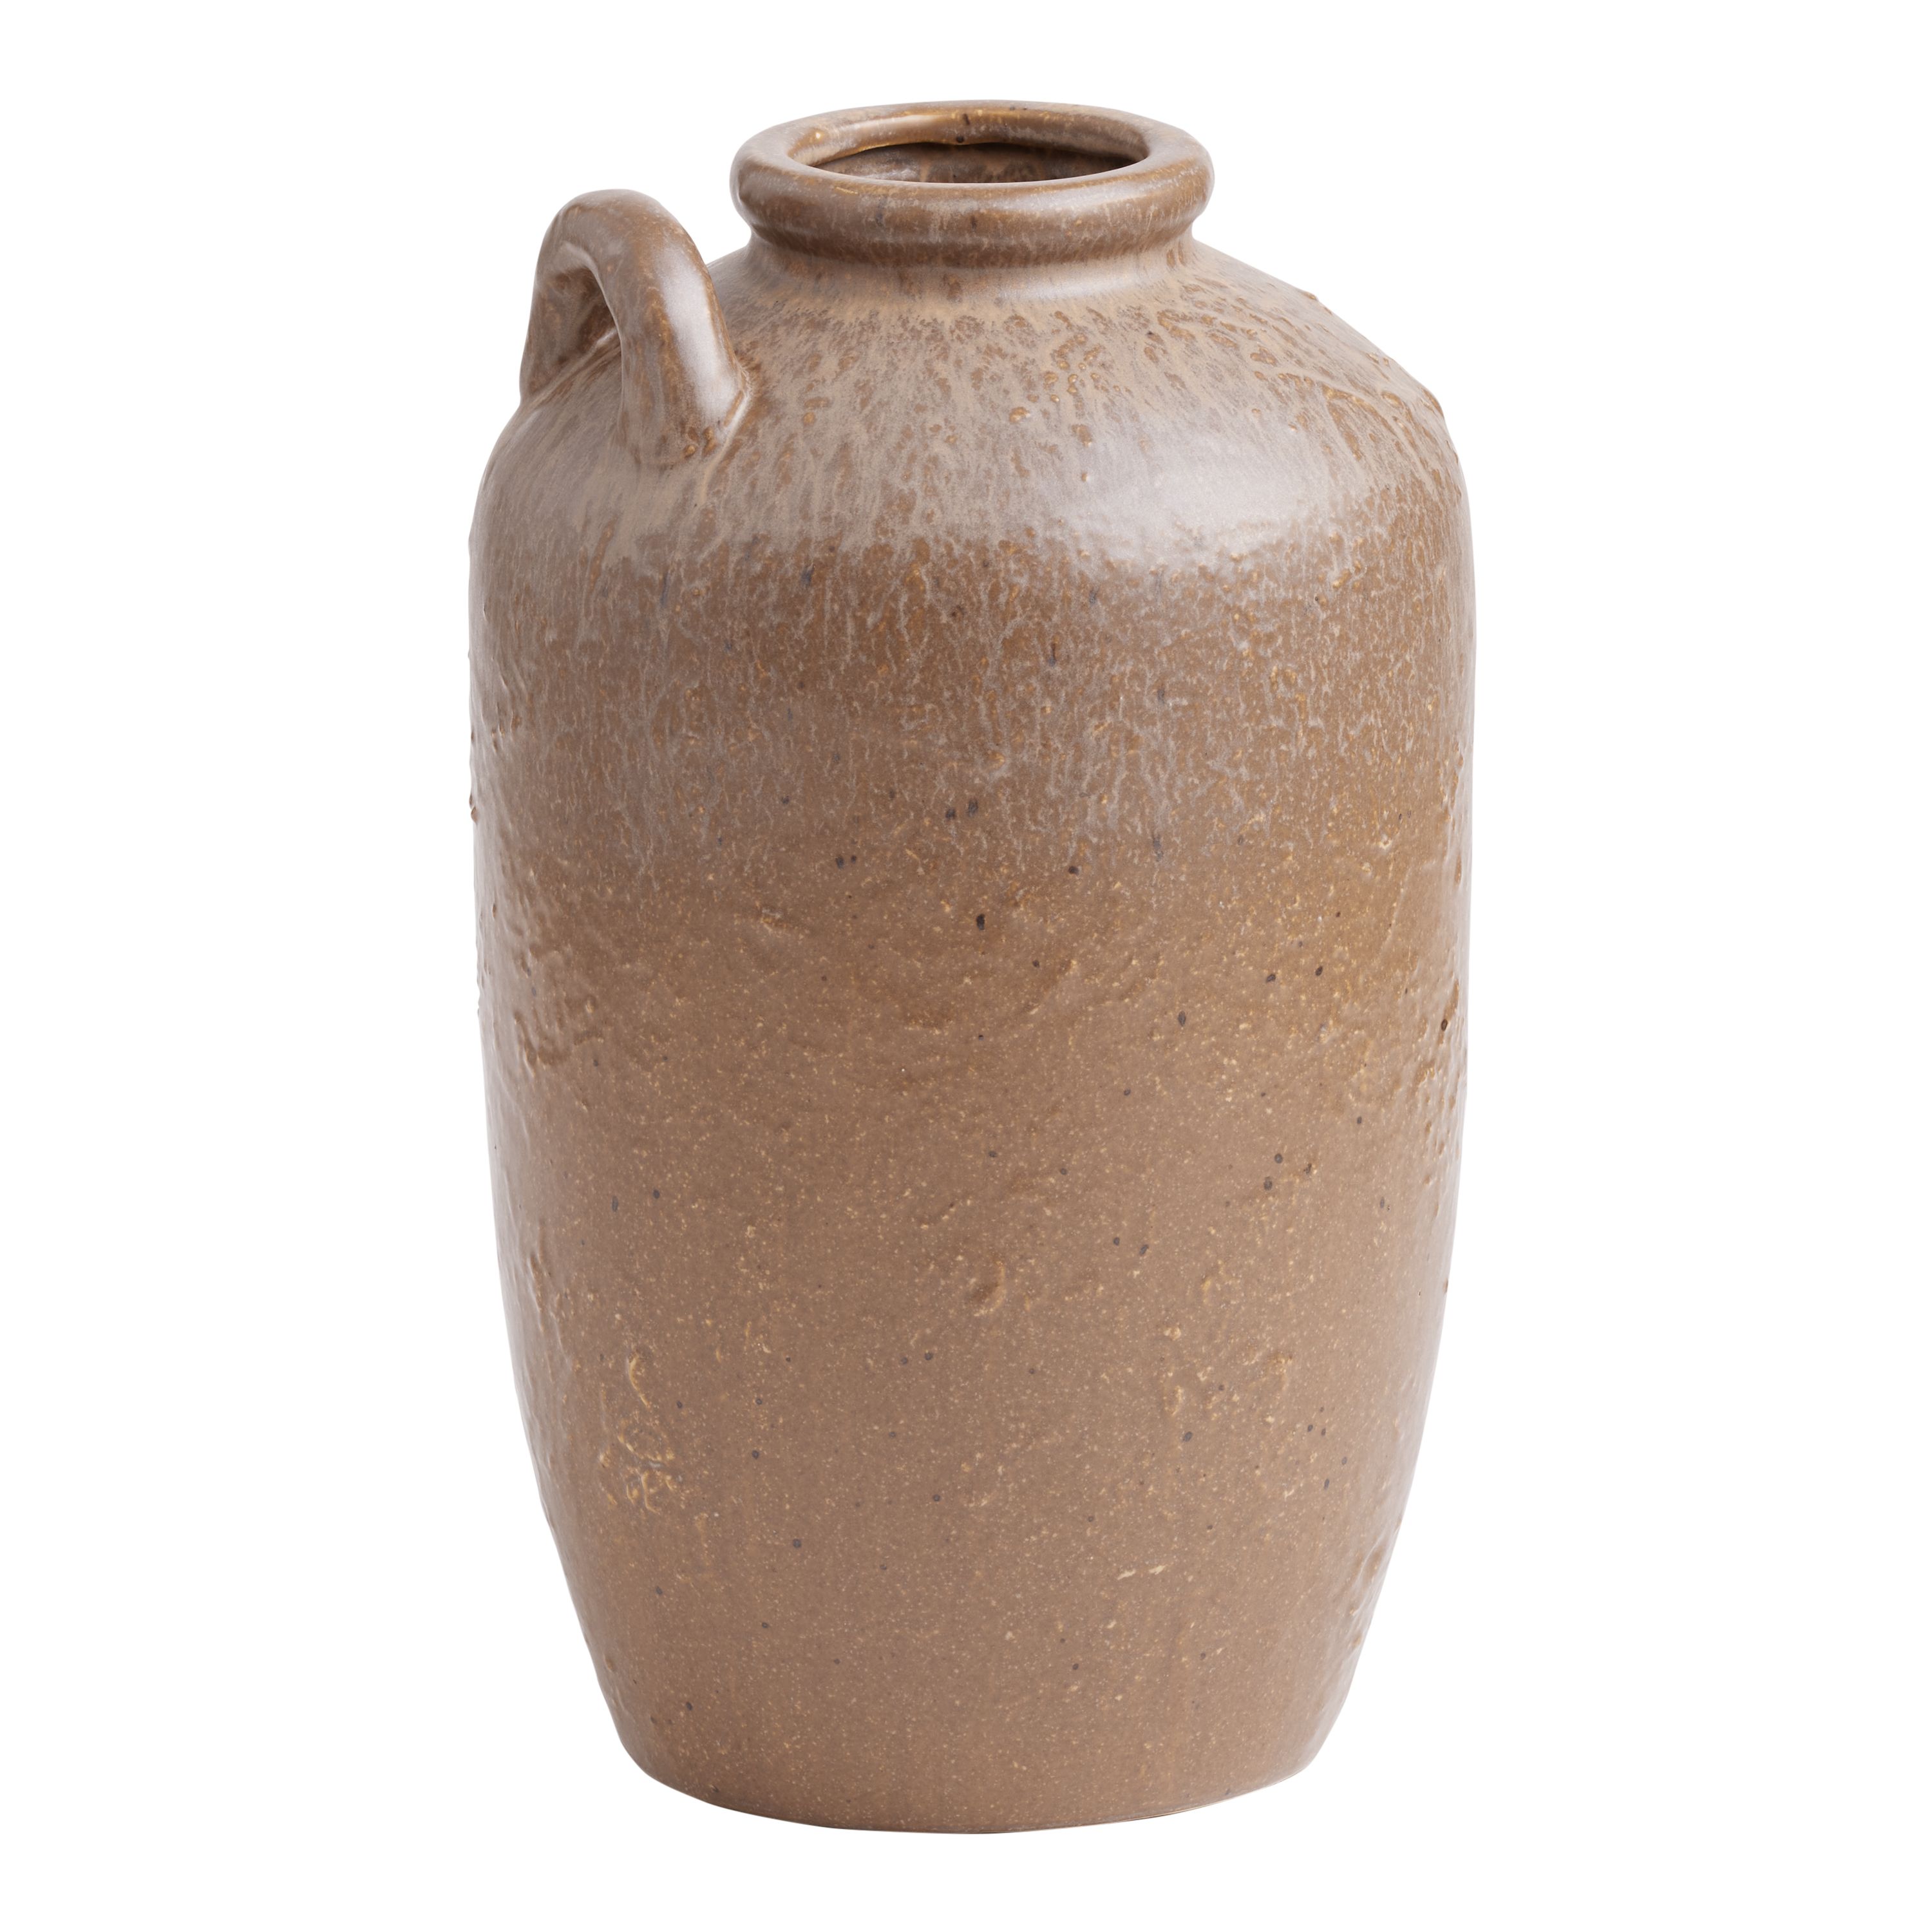 Rust Reactive Glaze Ceramic Jug Vase - World Market | World Market